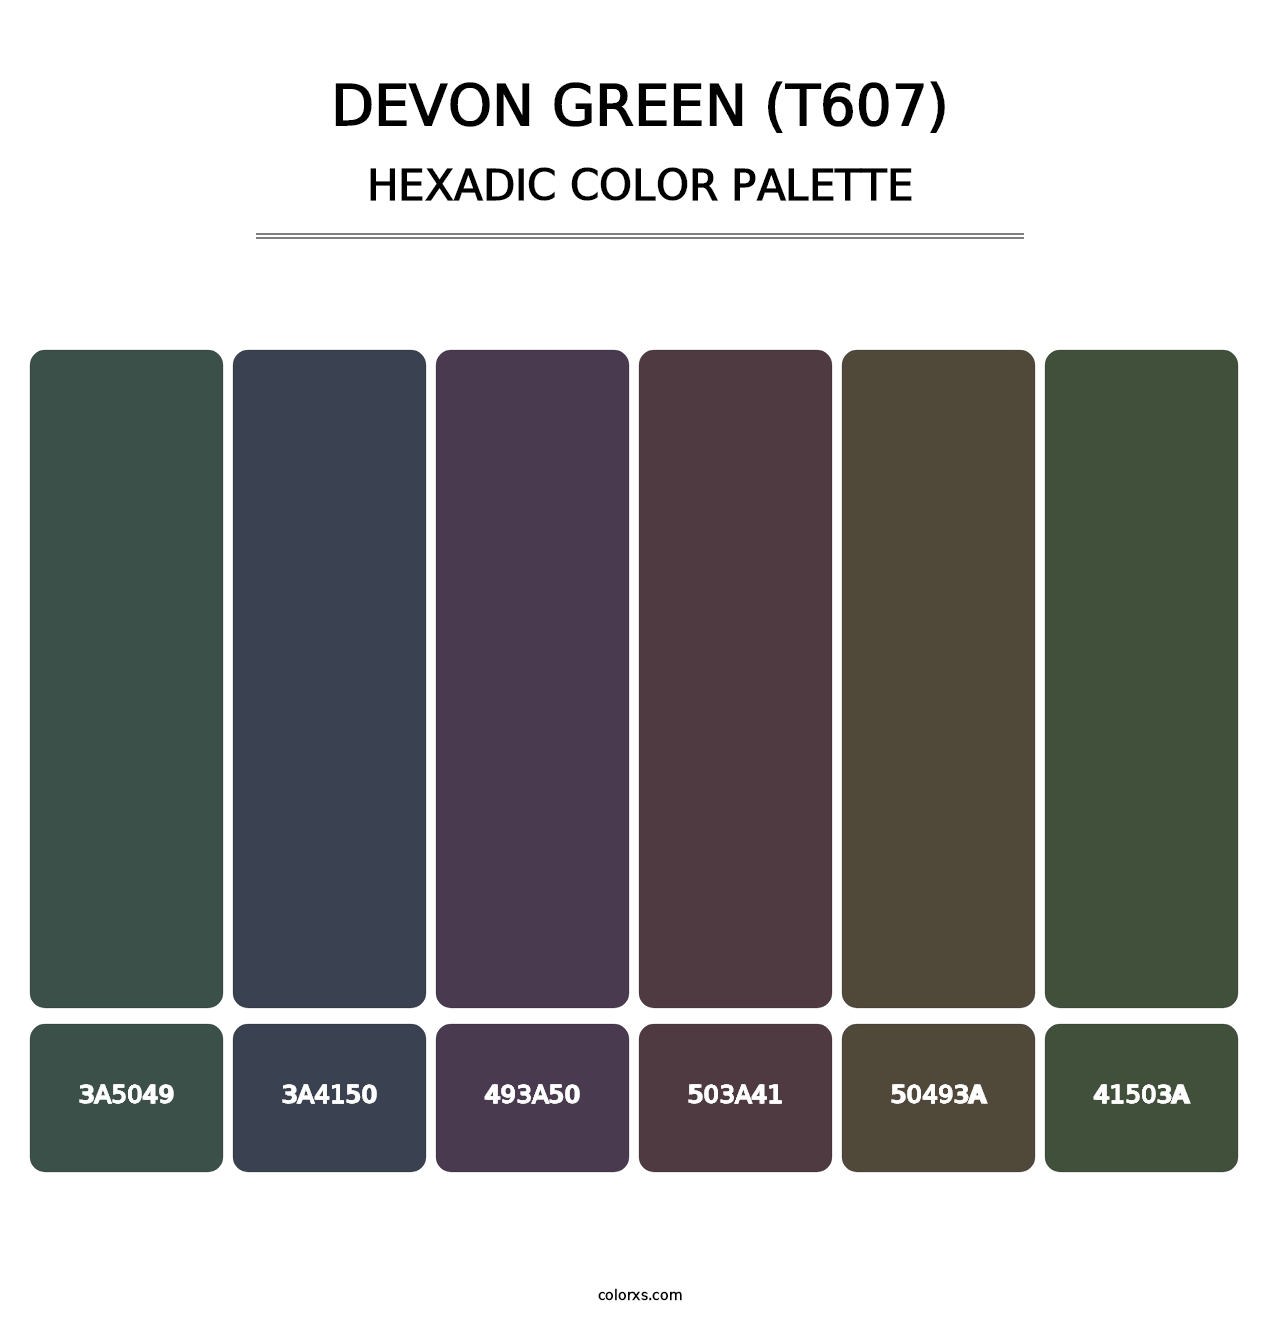 Devon Green (T607) - Hexadic Color Palette